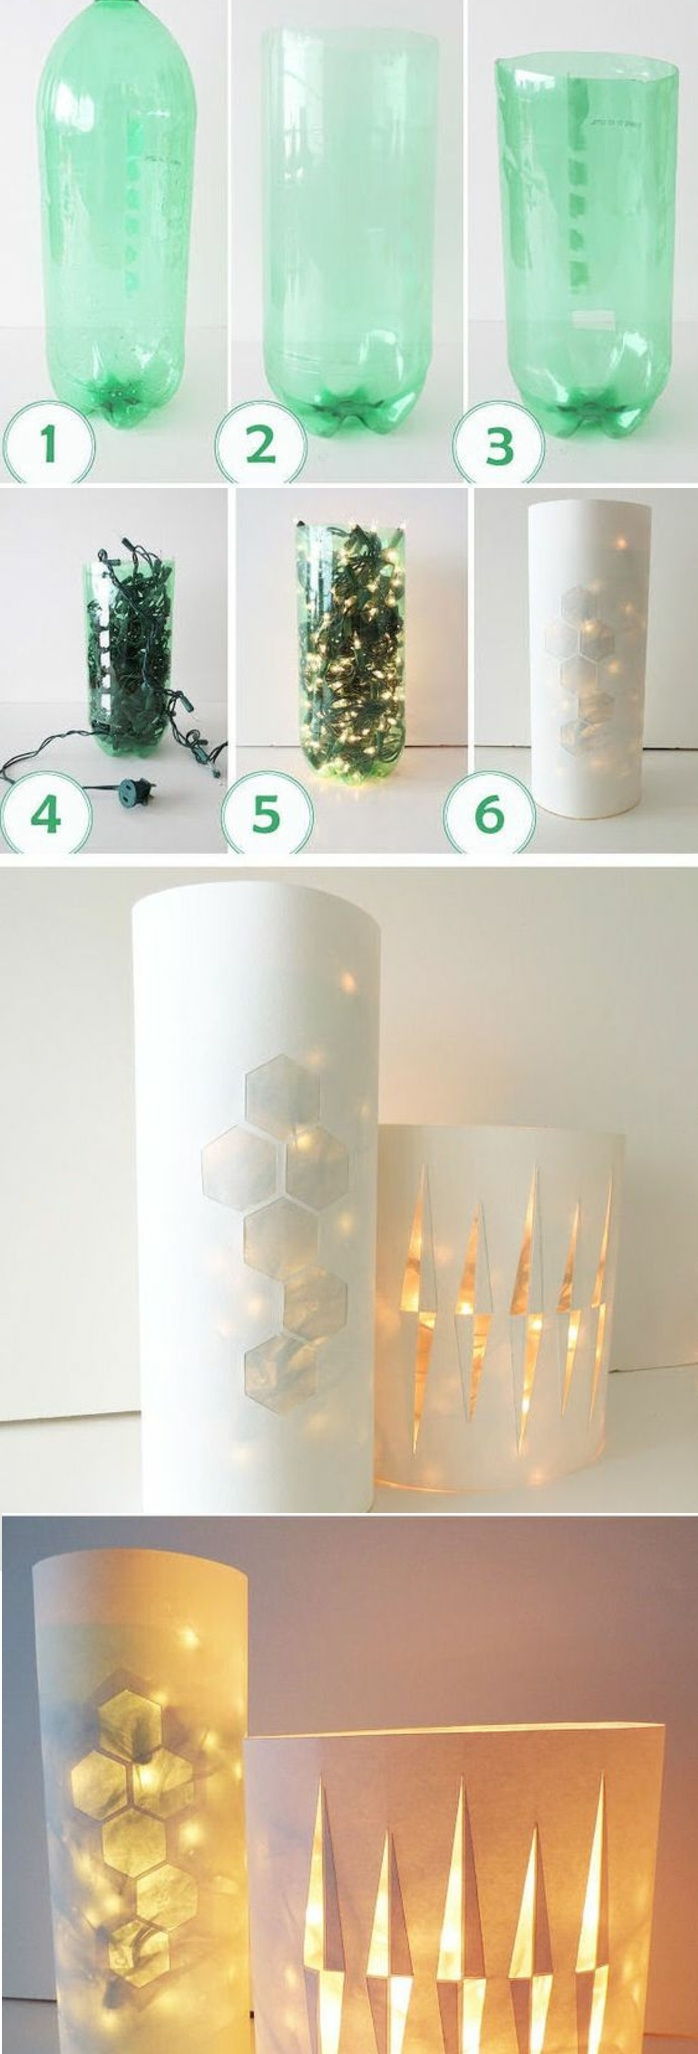 grønn plastflaske, julelys, hvitt papir